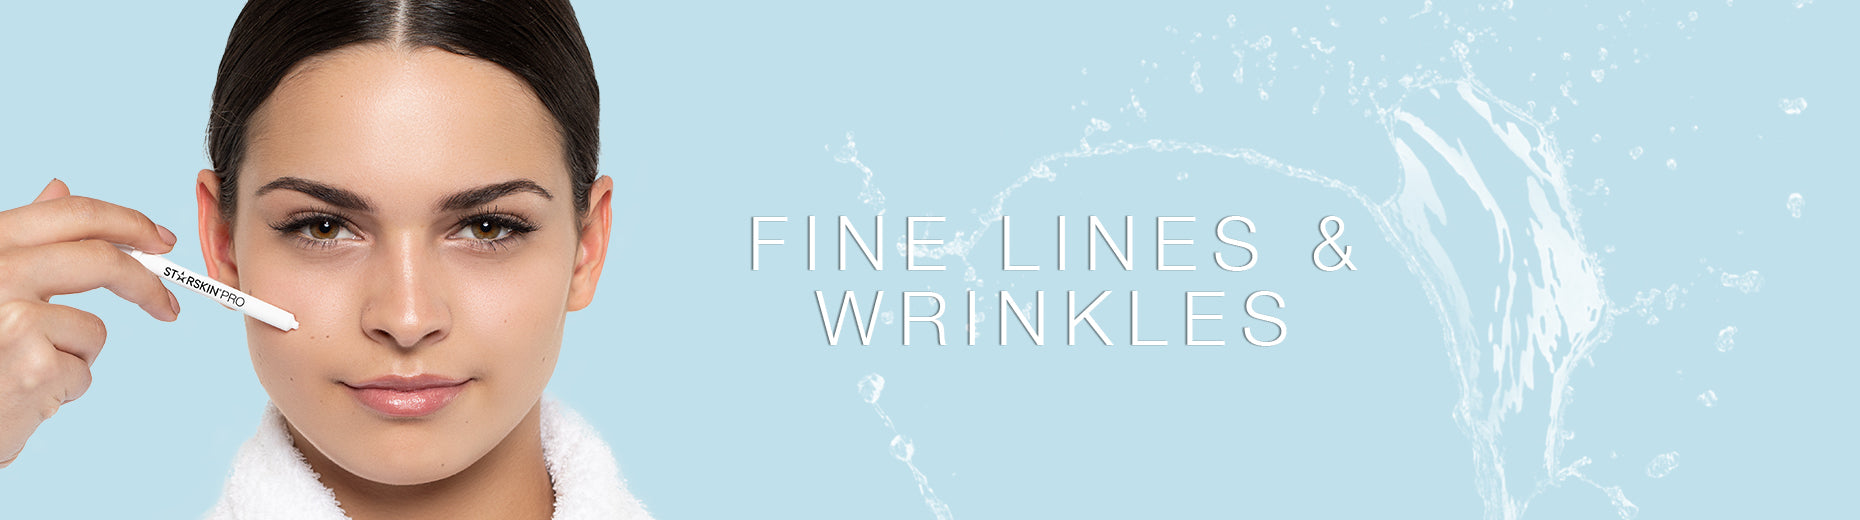 banner fine lines and wrinkles model using micro filler seringe